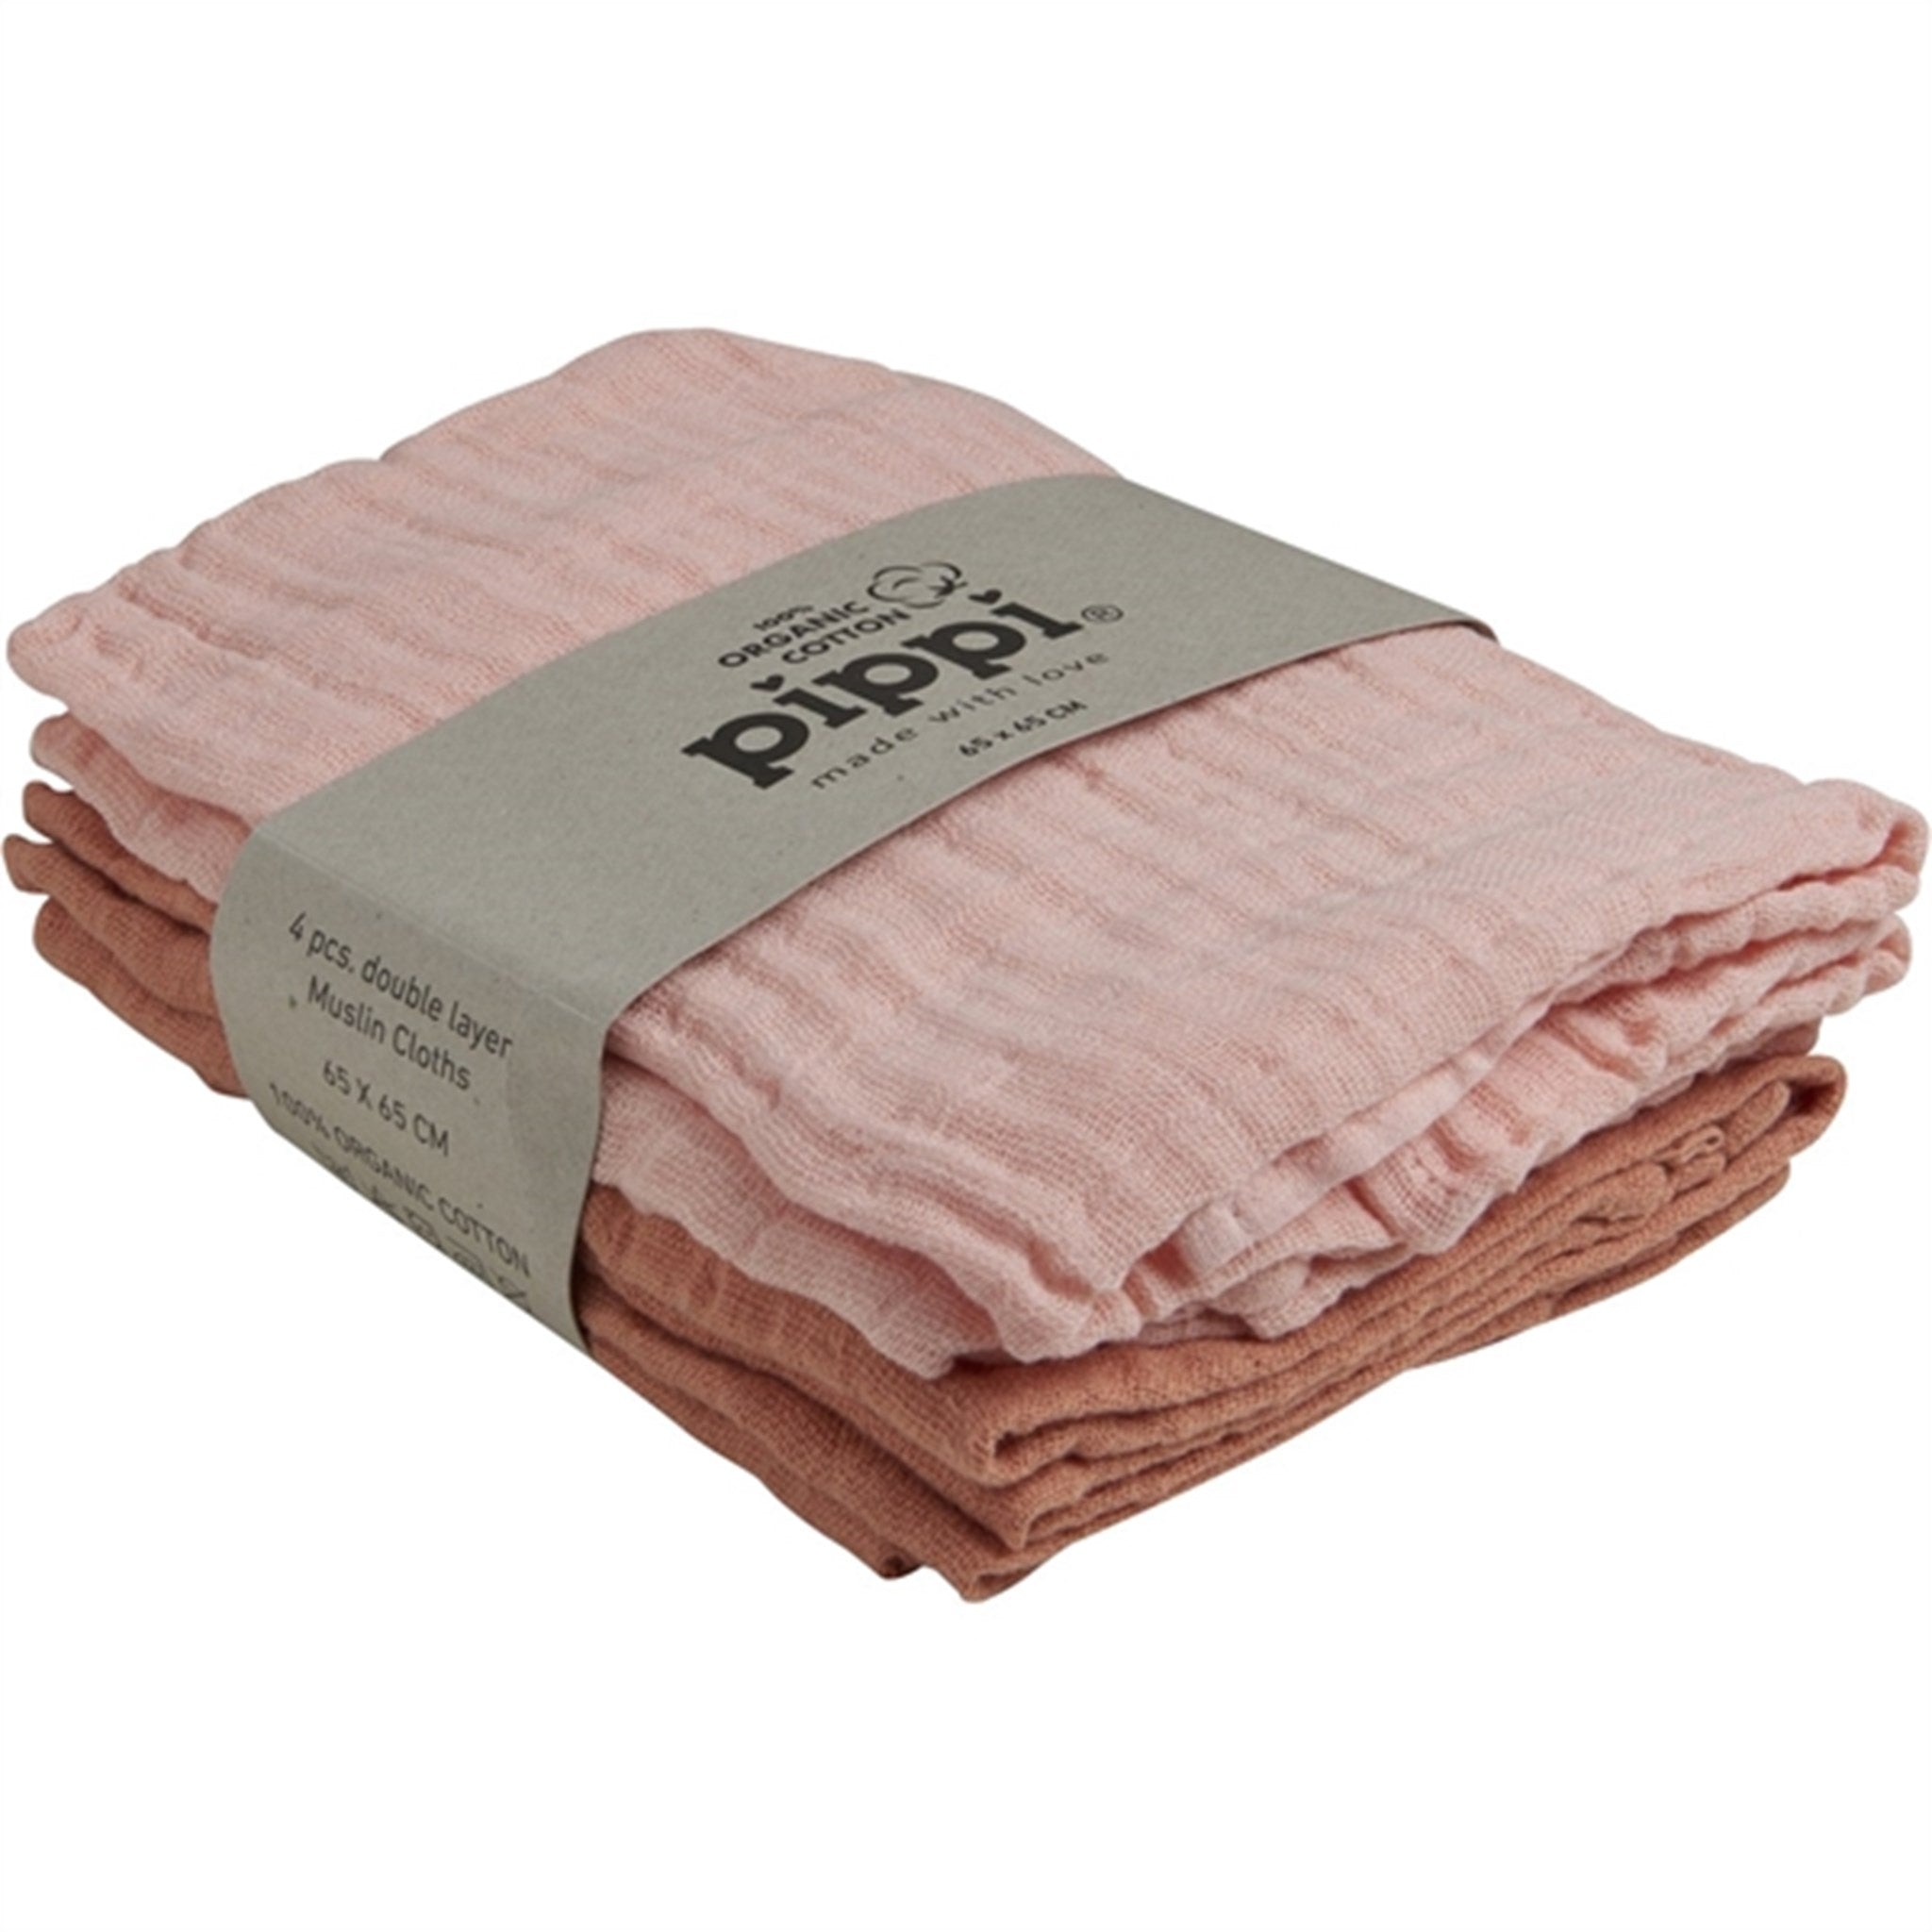 Pippi Organic Muslin Cloths 4-pack Veiled Rose